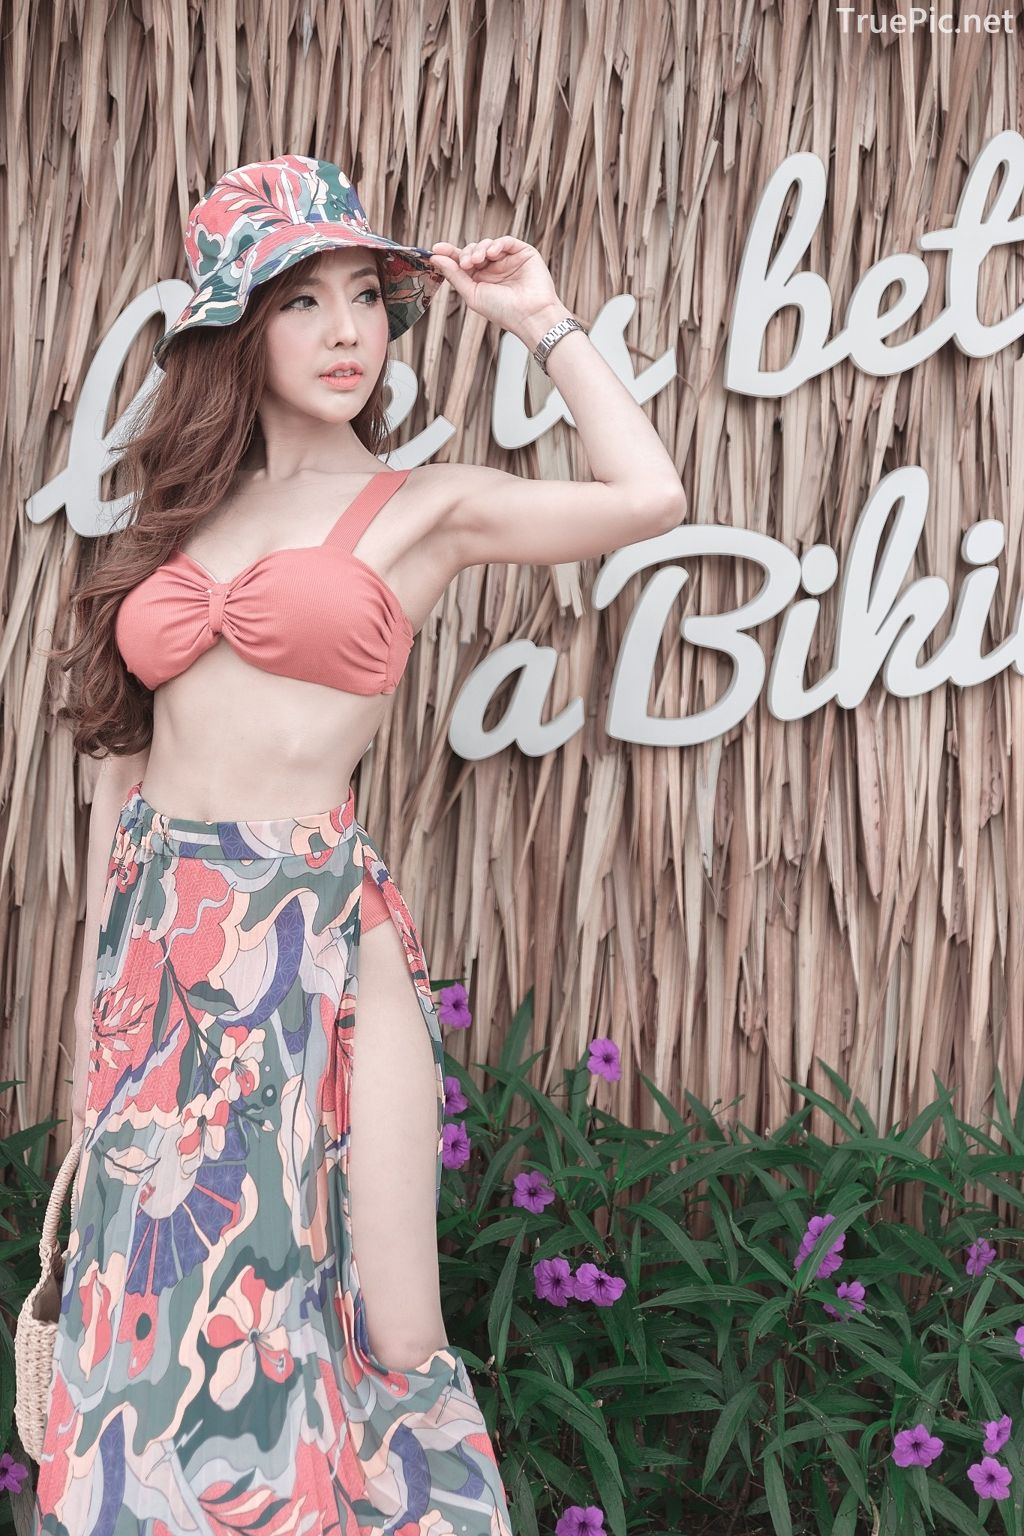 Thailand model - I'nam Arissara Chaidech - Pink Bikini on the beach - TruePic.net - Picture 19